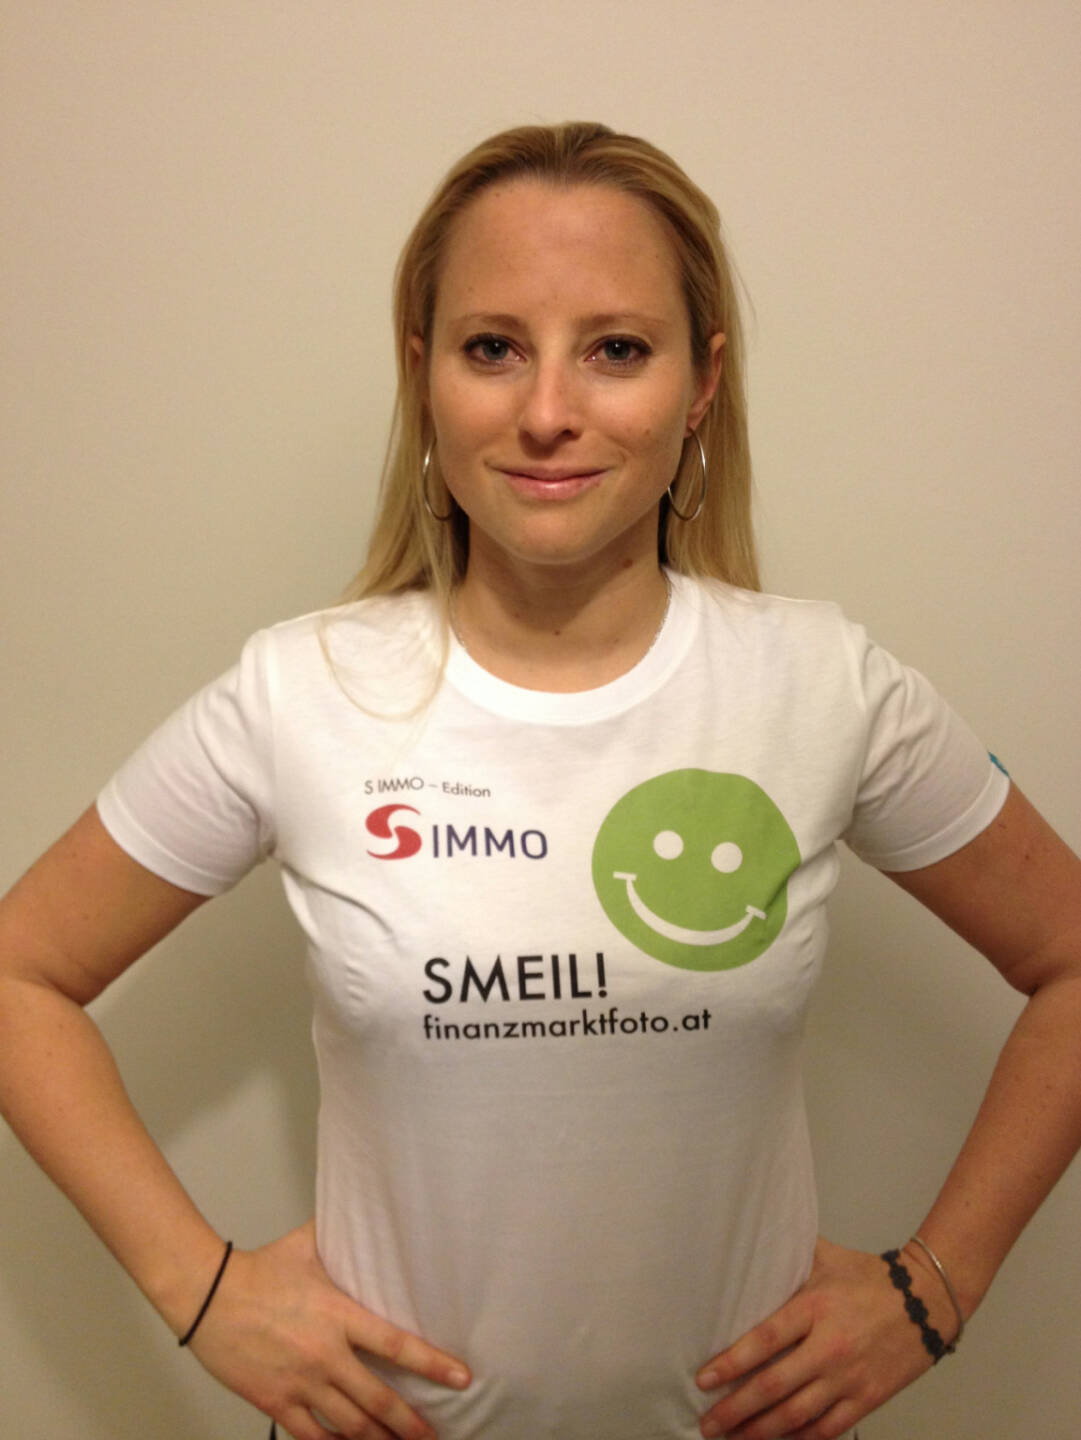 Crowdinvesting Smeil!, Karin Timmel, Conda (Shirt in der S Immo-Kollektion)